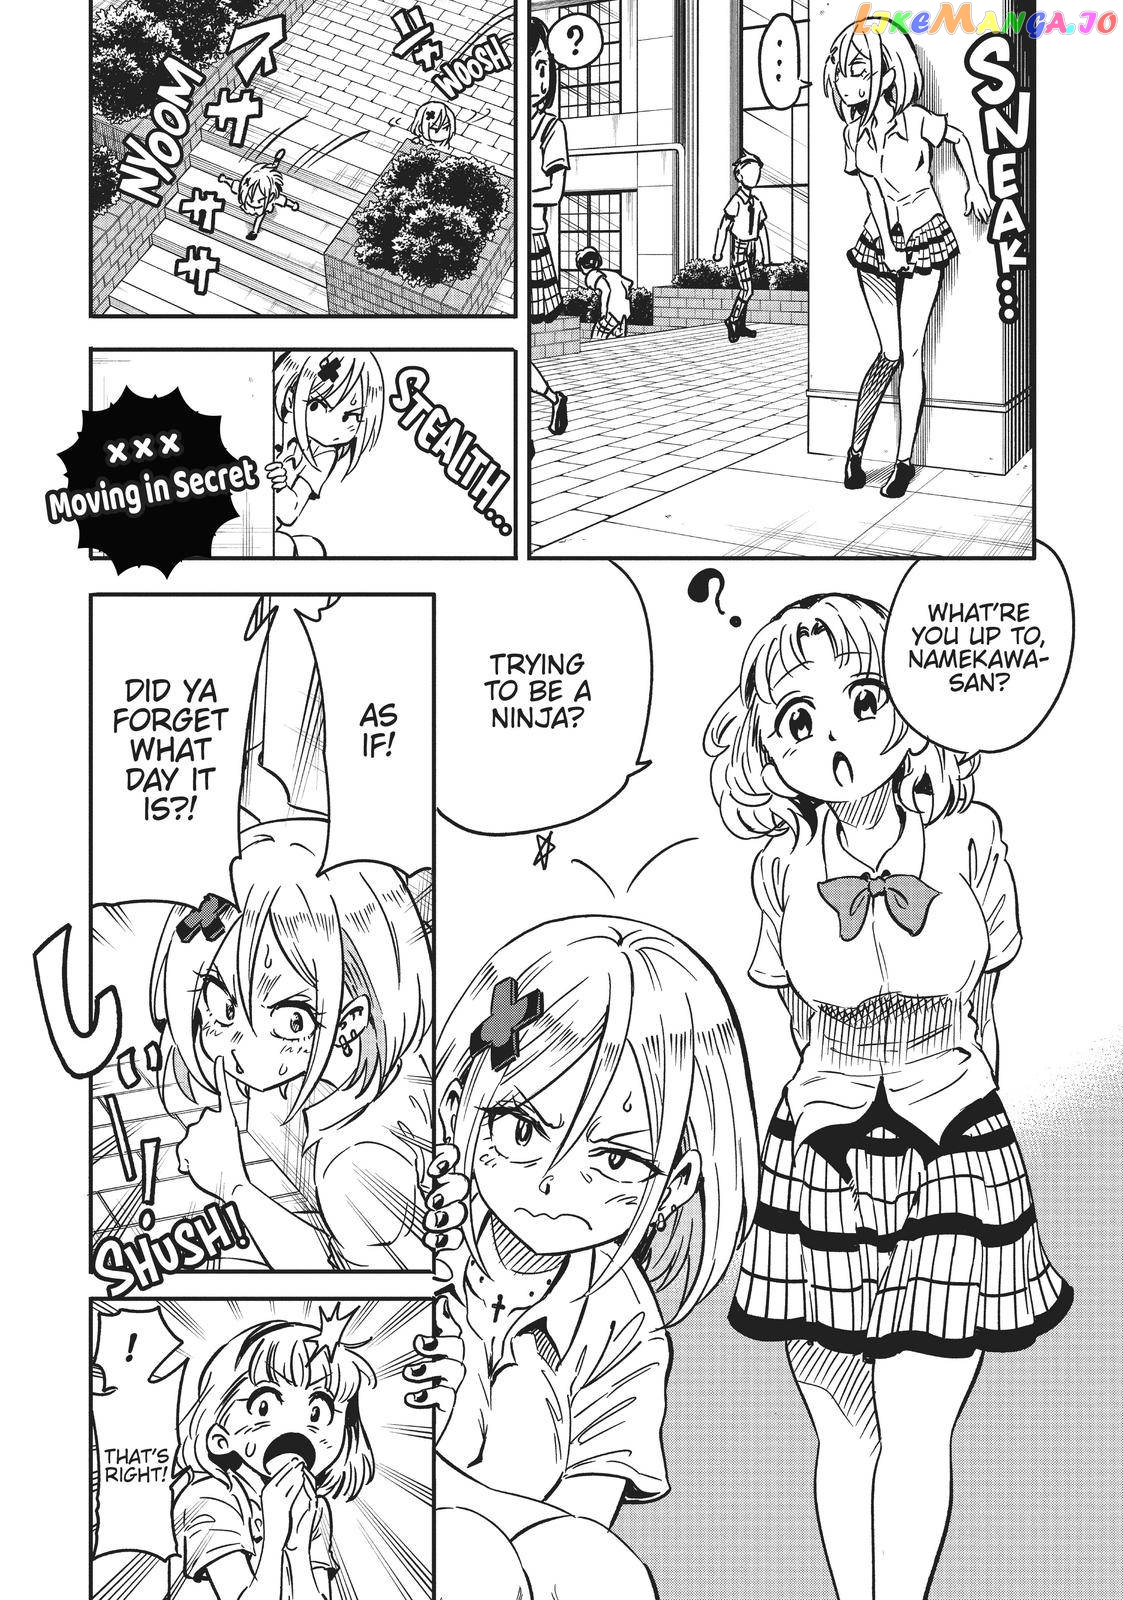 Namekawa-san Won't Take a Licking! Chapter 6 - page 4